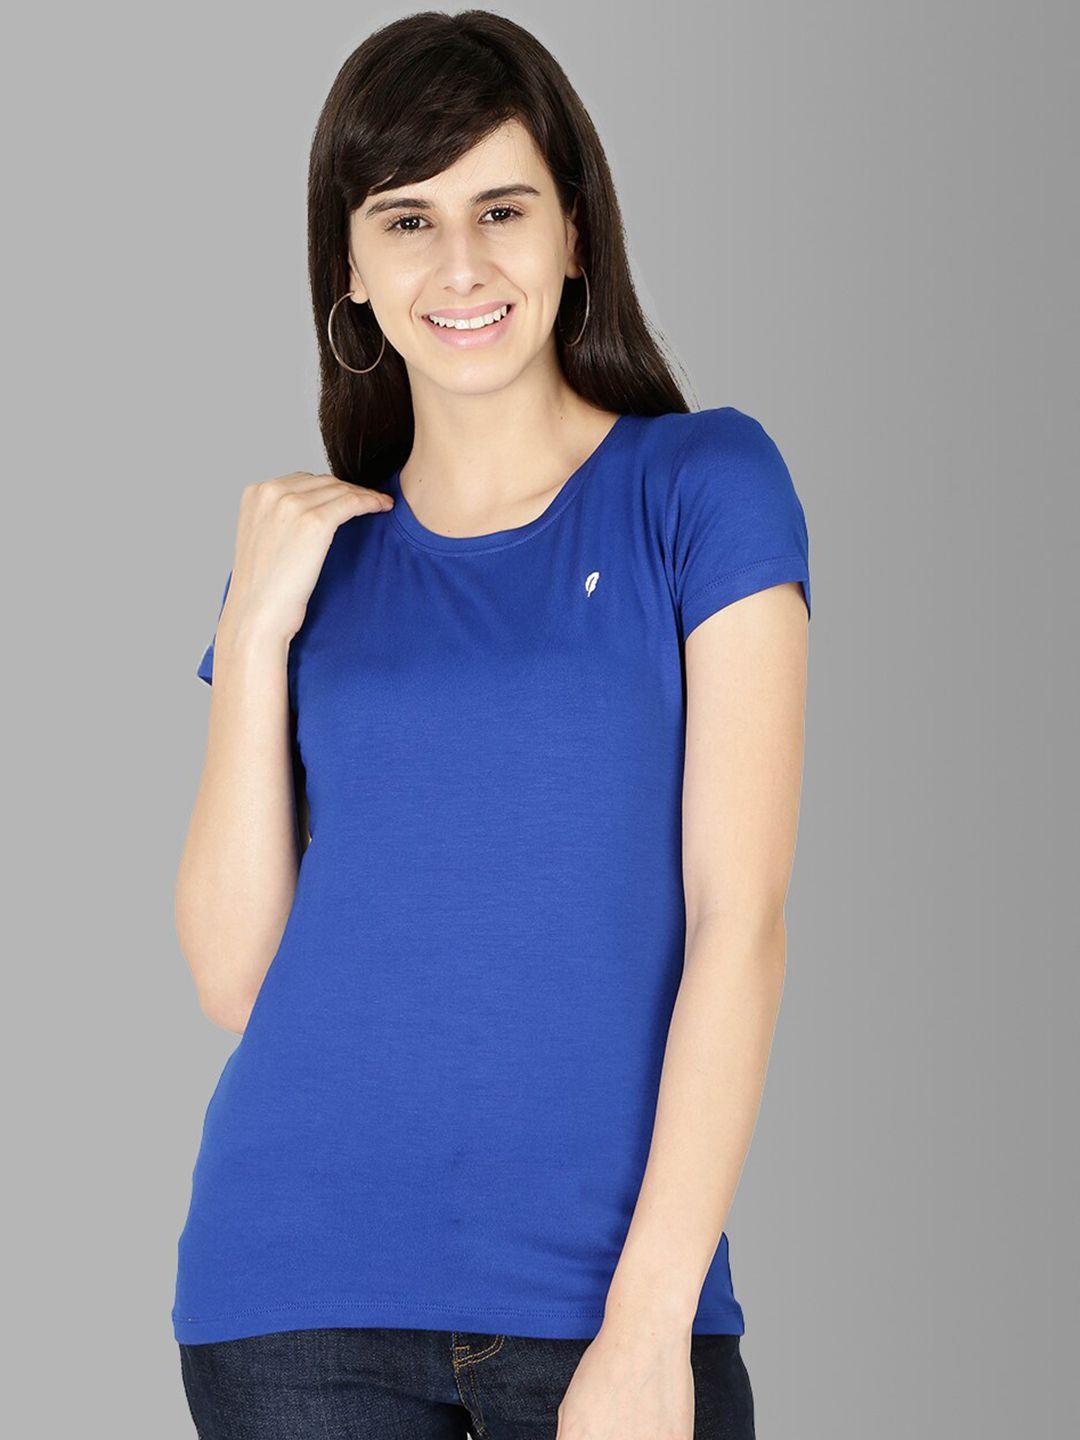 feather soft elite women blue extended sleeves indigo slim fit running t-shirt